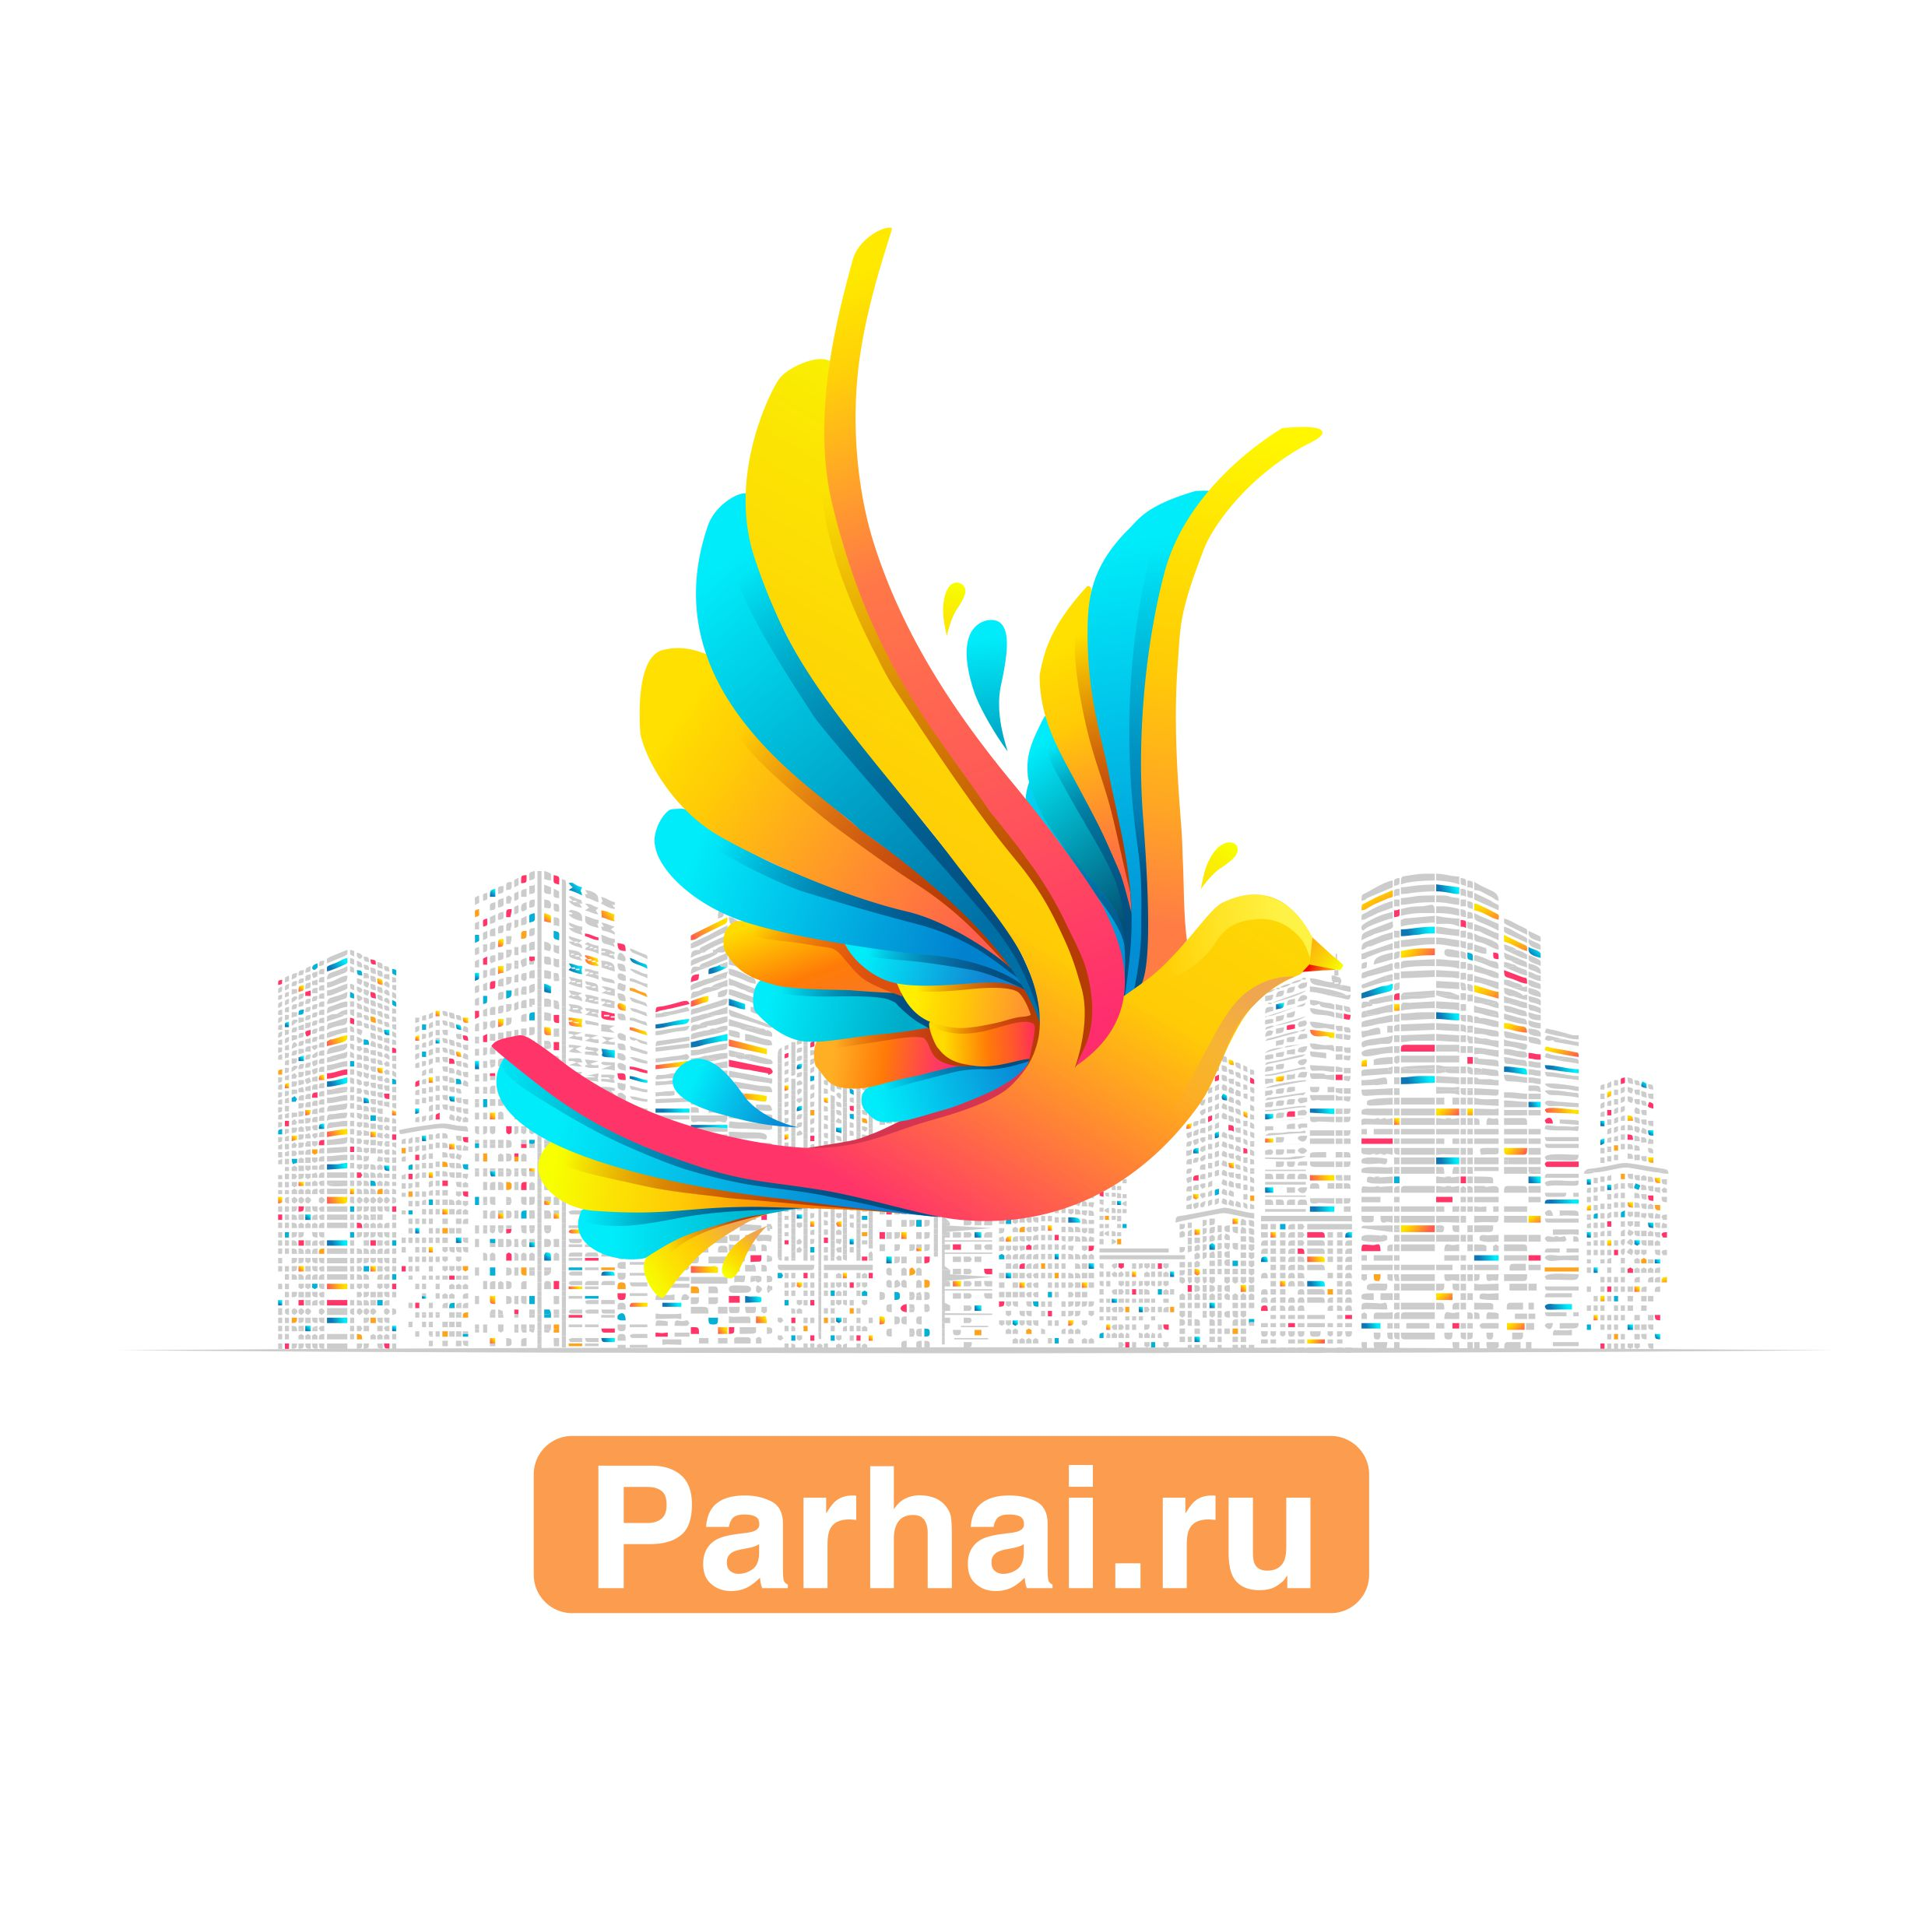 Parhai.ru - система онлайн бронирования недвижимости